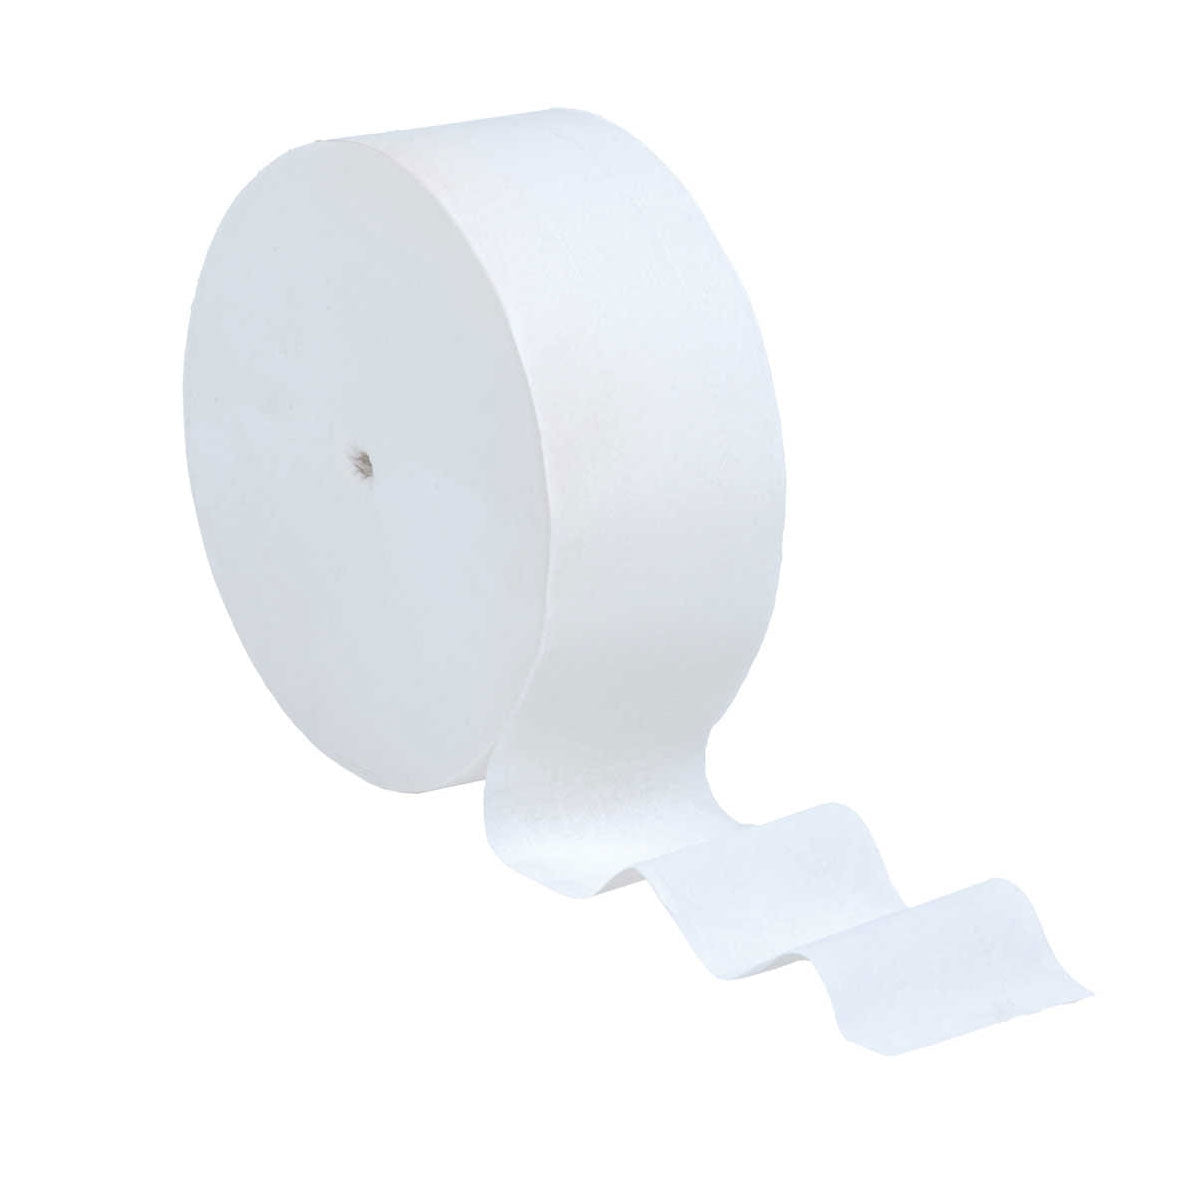  Scott® High-Capacity Jumbo Roll Toilet Paper (07805